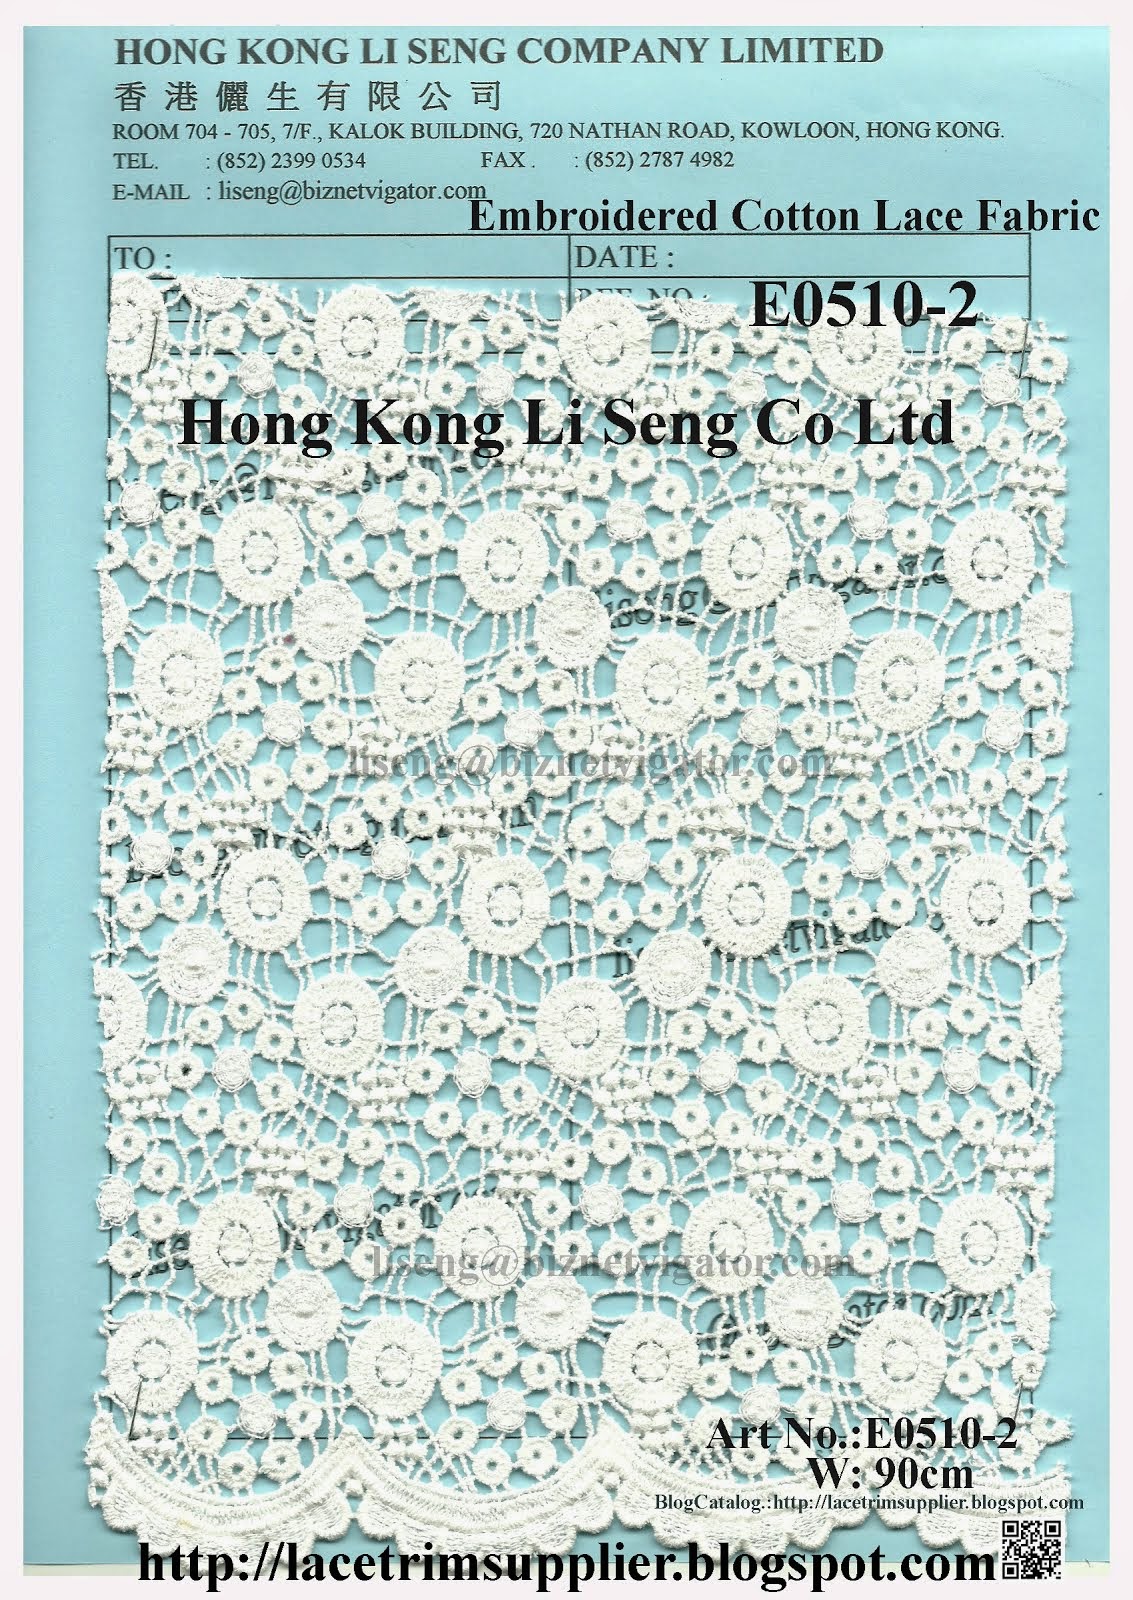 2014 - New Lace Fabric Pattern Shown On - Hong Kong Li Seng Co Ltd